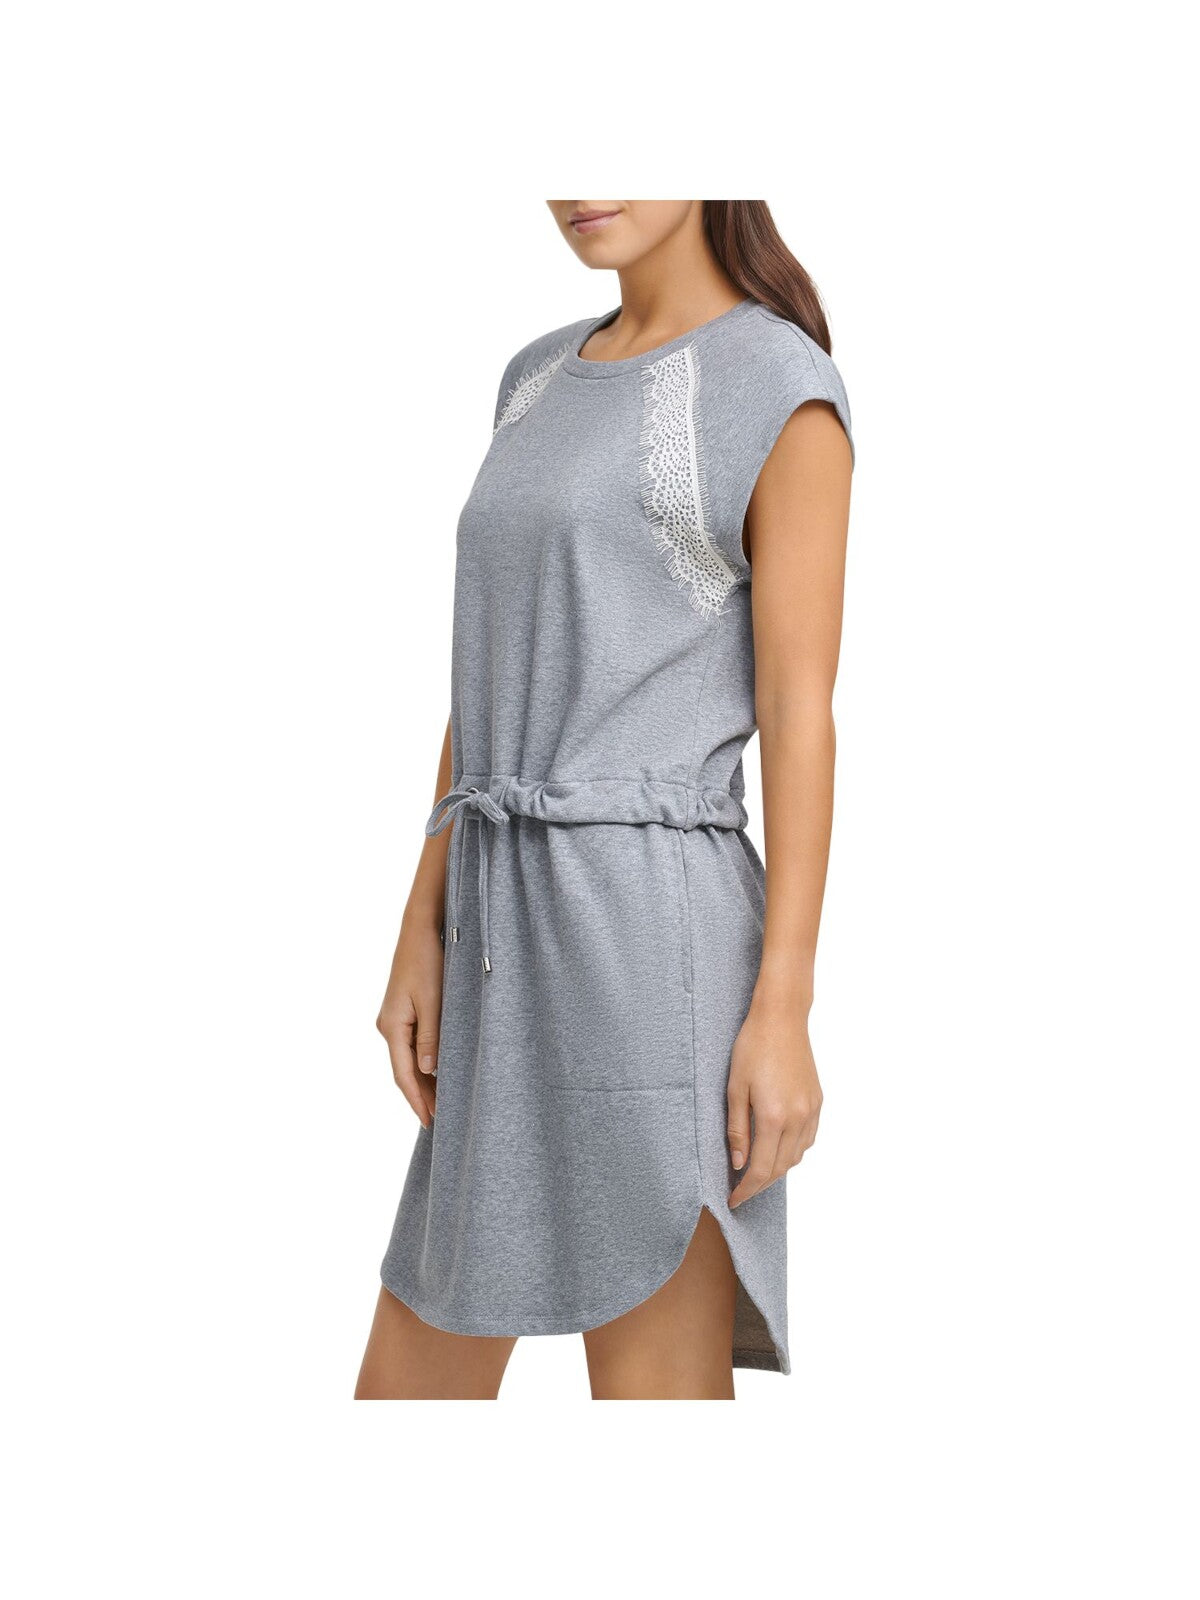 DKNY Womens Gray Lace Drawstring-waist Heather Cap Sleeve Crew Neck Short Shift Dress XS